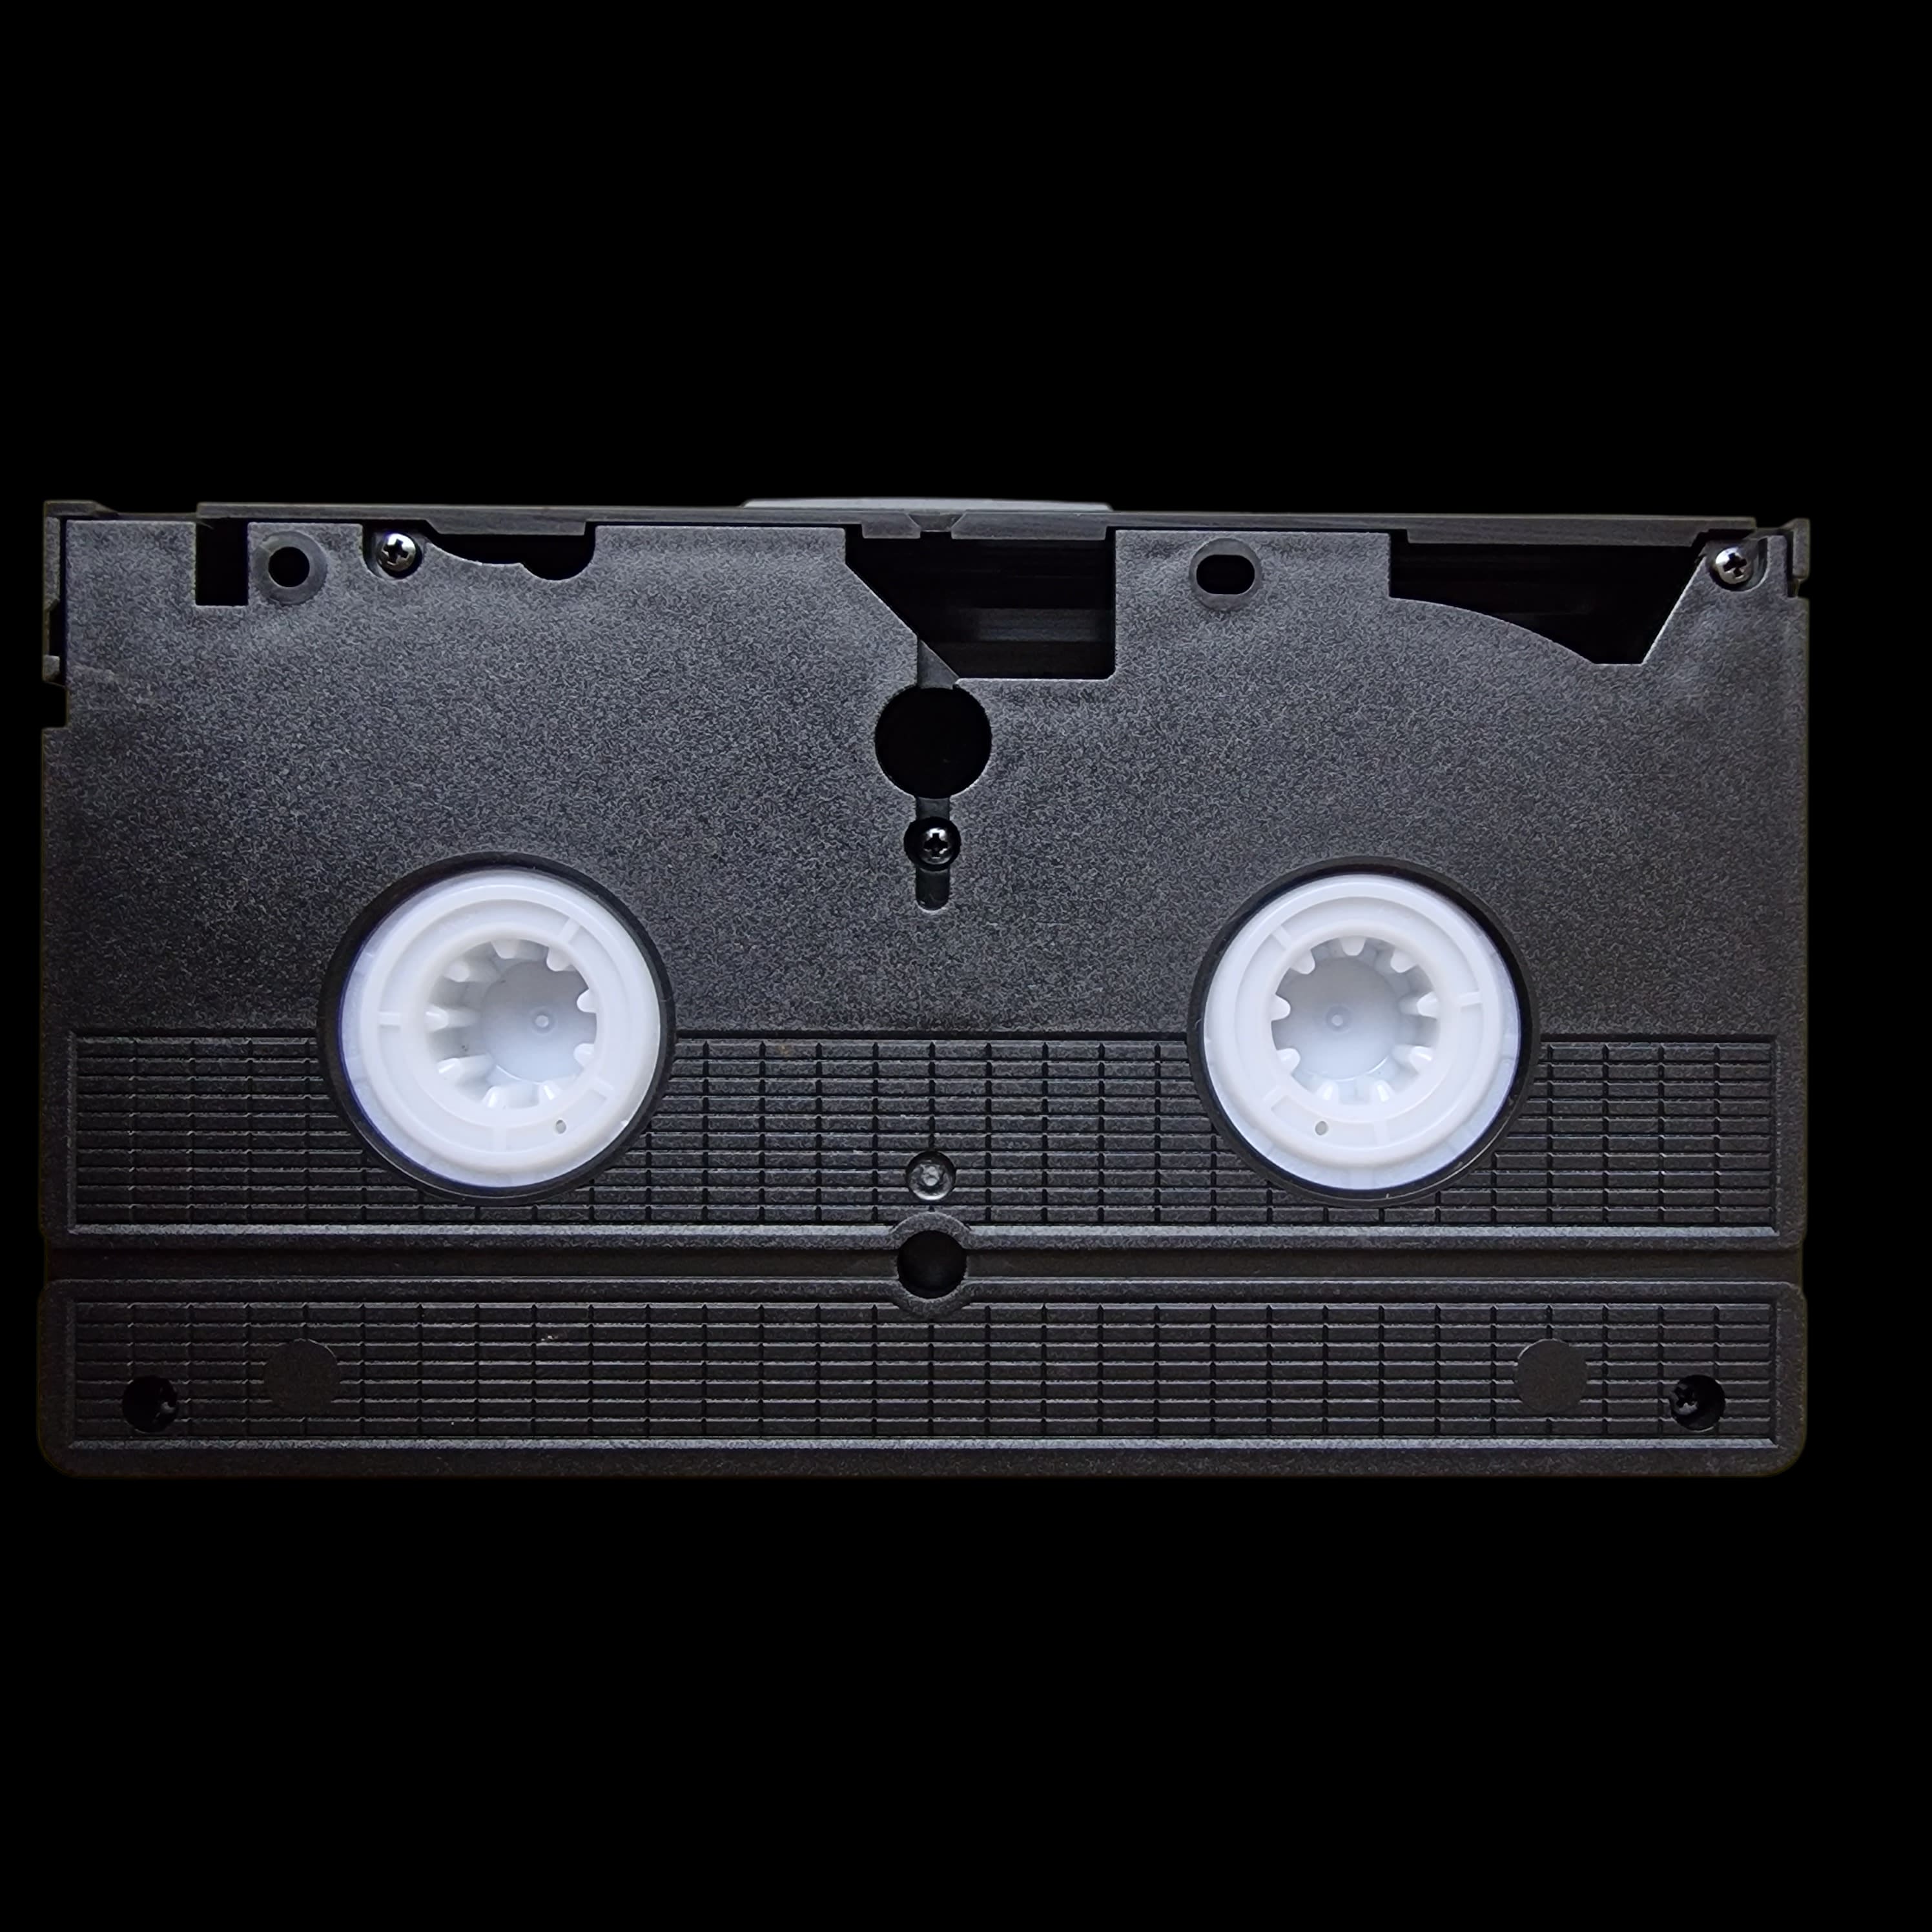 VHS Movie The Battle Of Gettysburg War Video Cassette